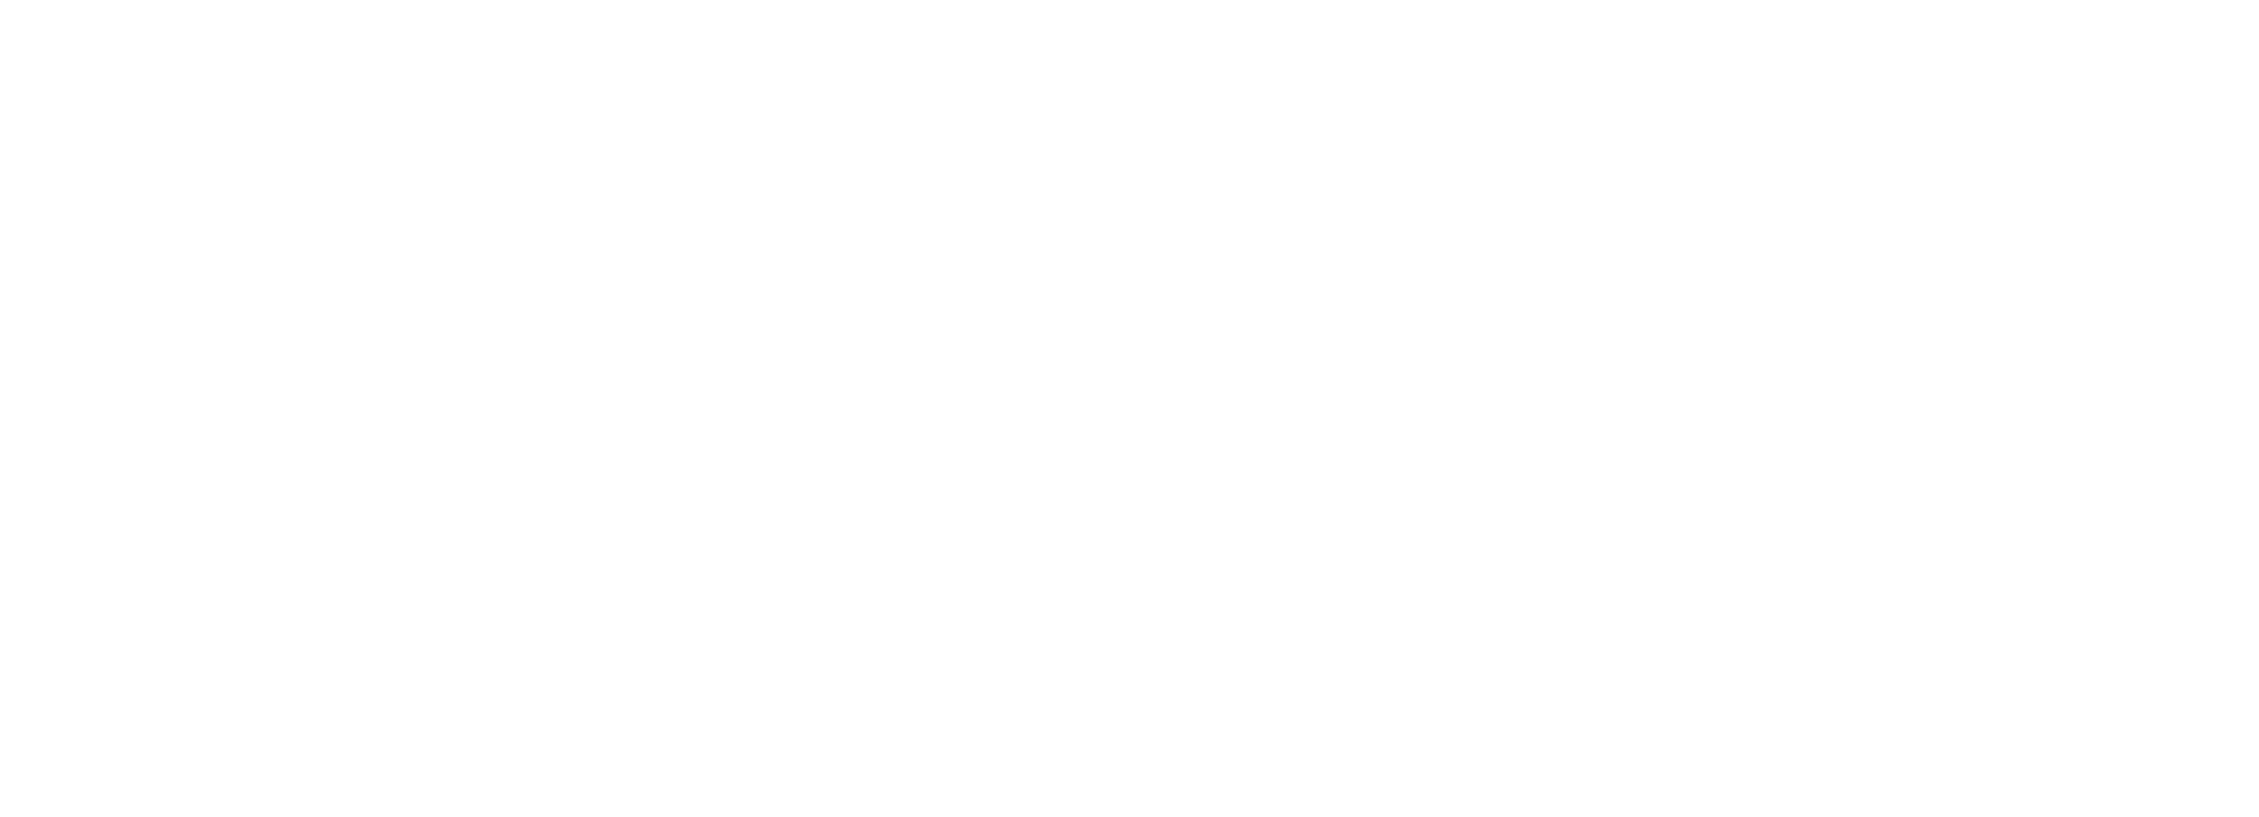 ClapTzu